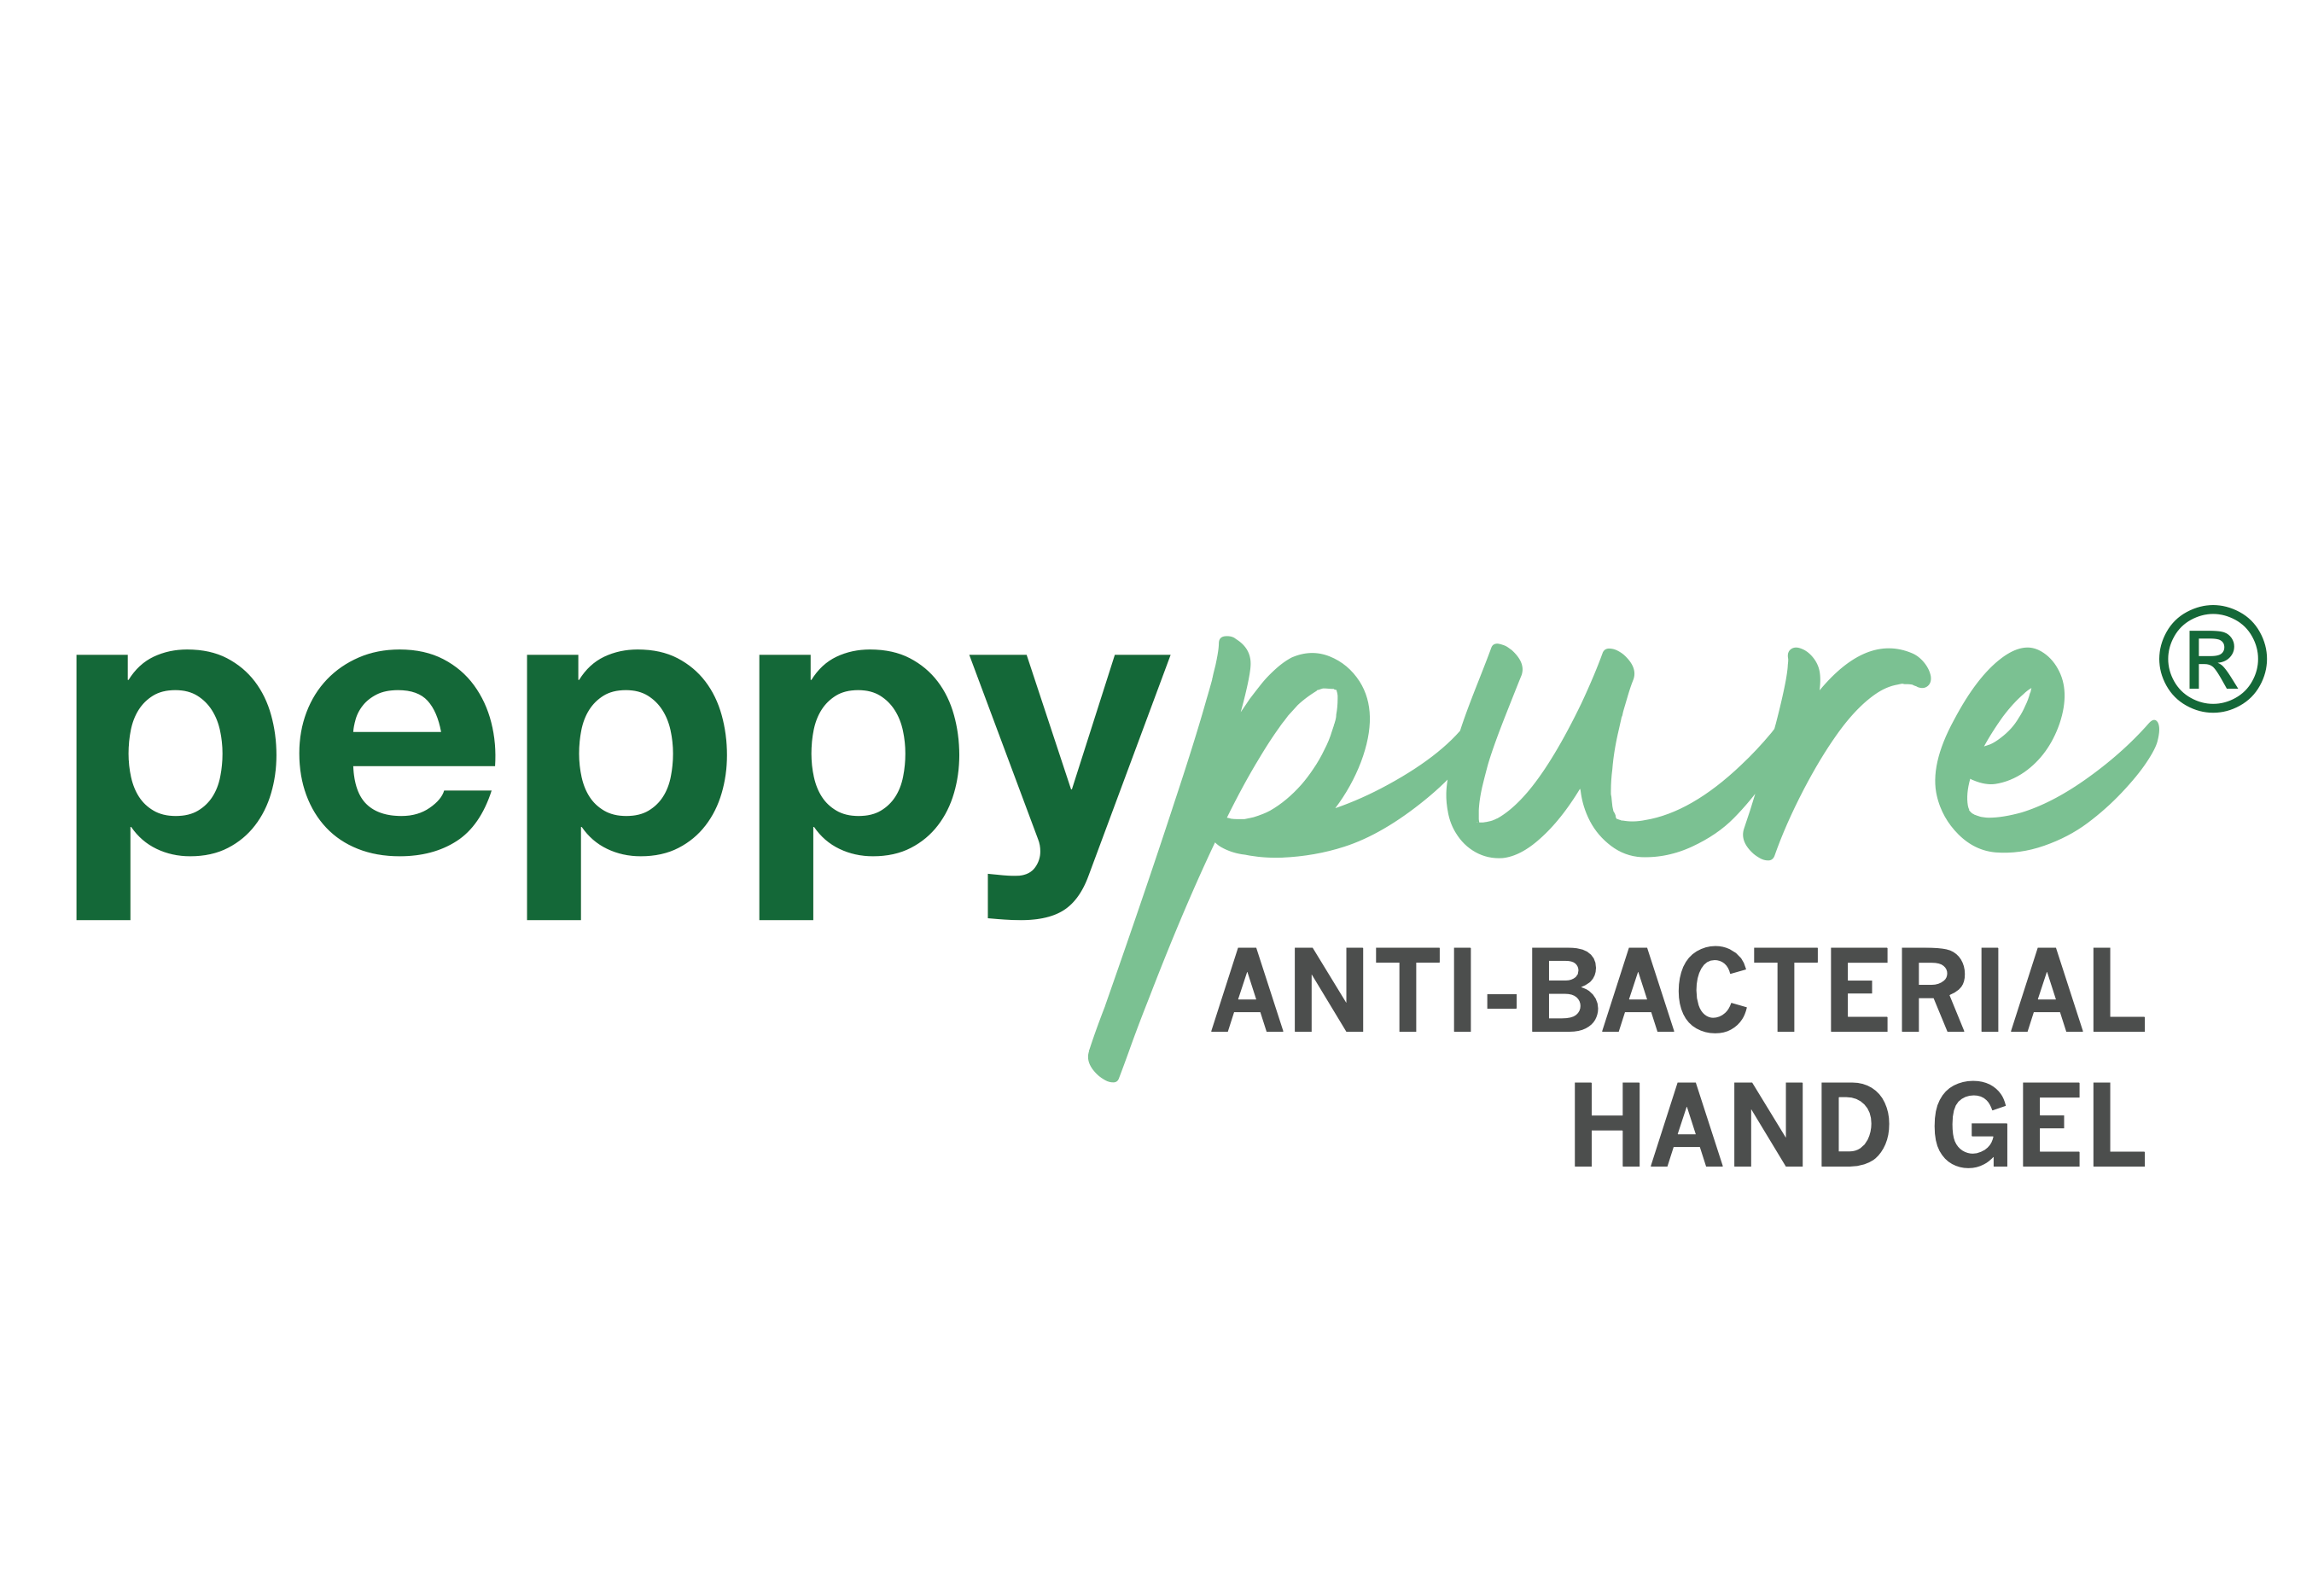 peppy pure logo